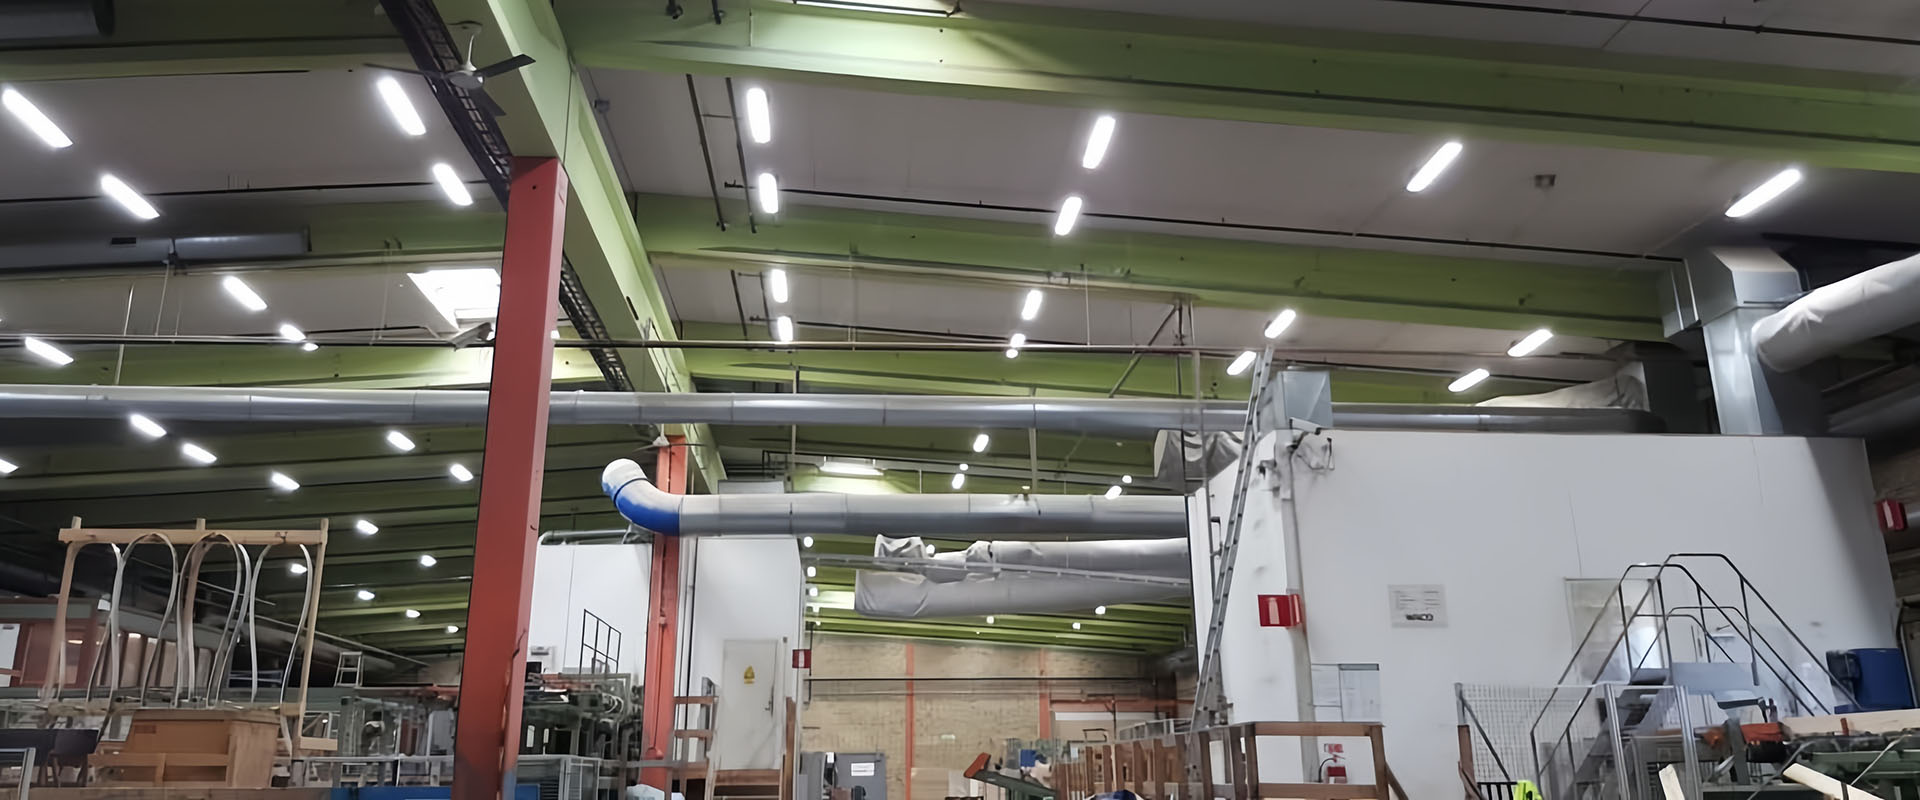 Lineare LED-Hochregalbedienung in der Fabrik